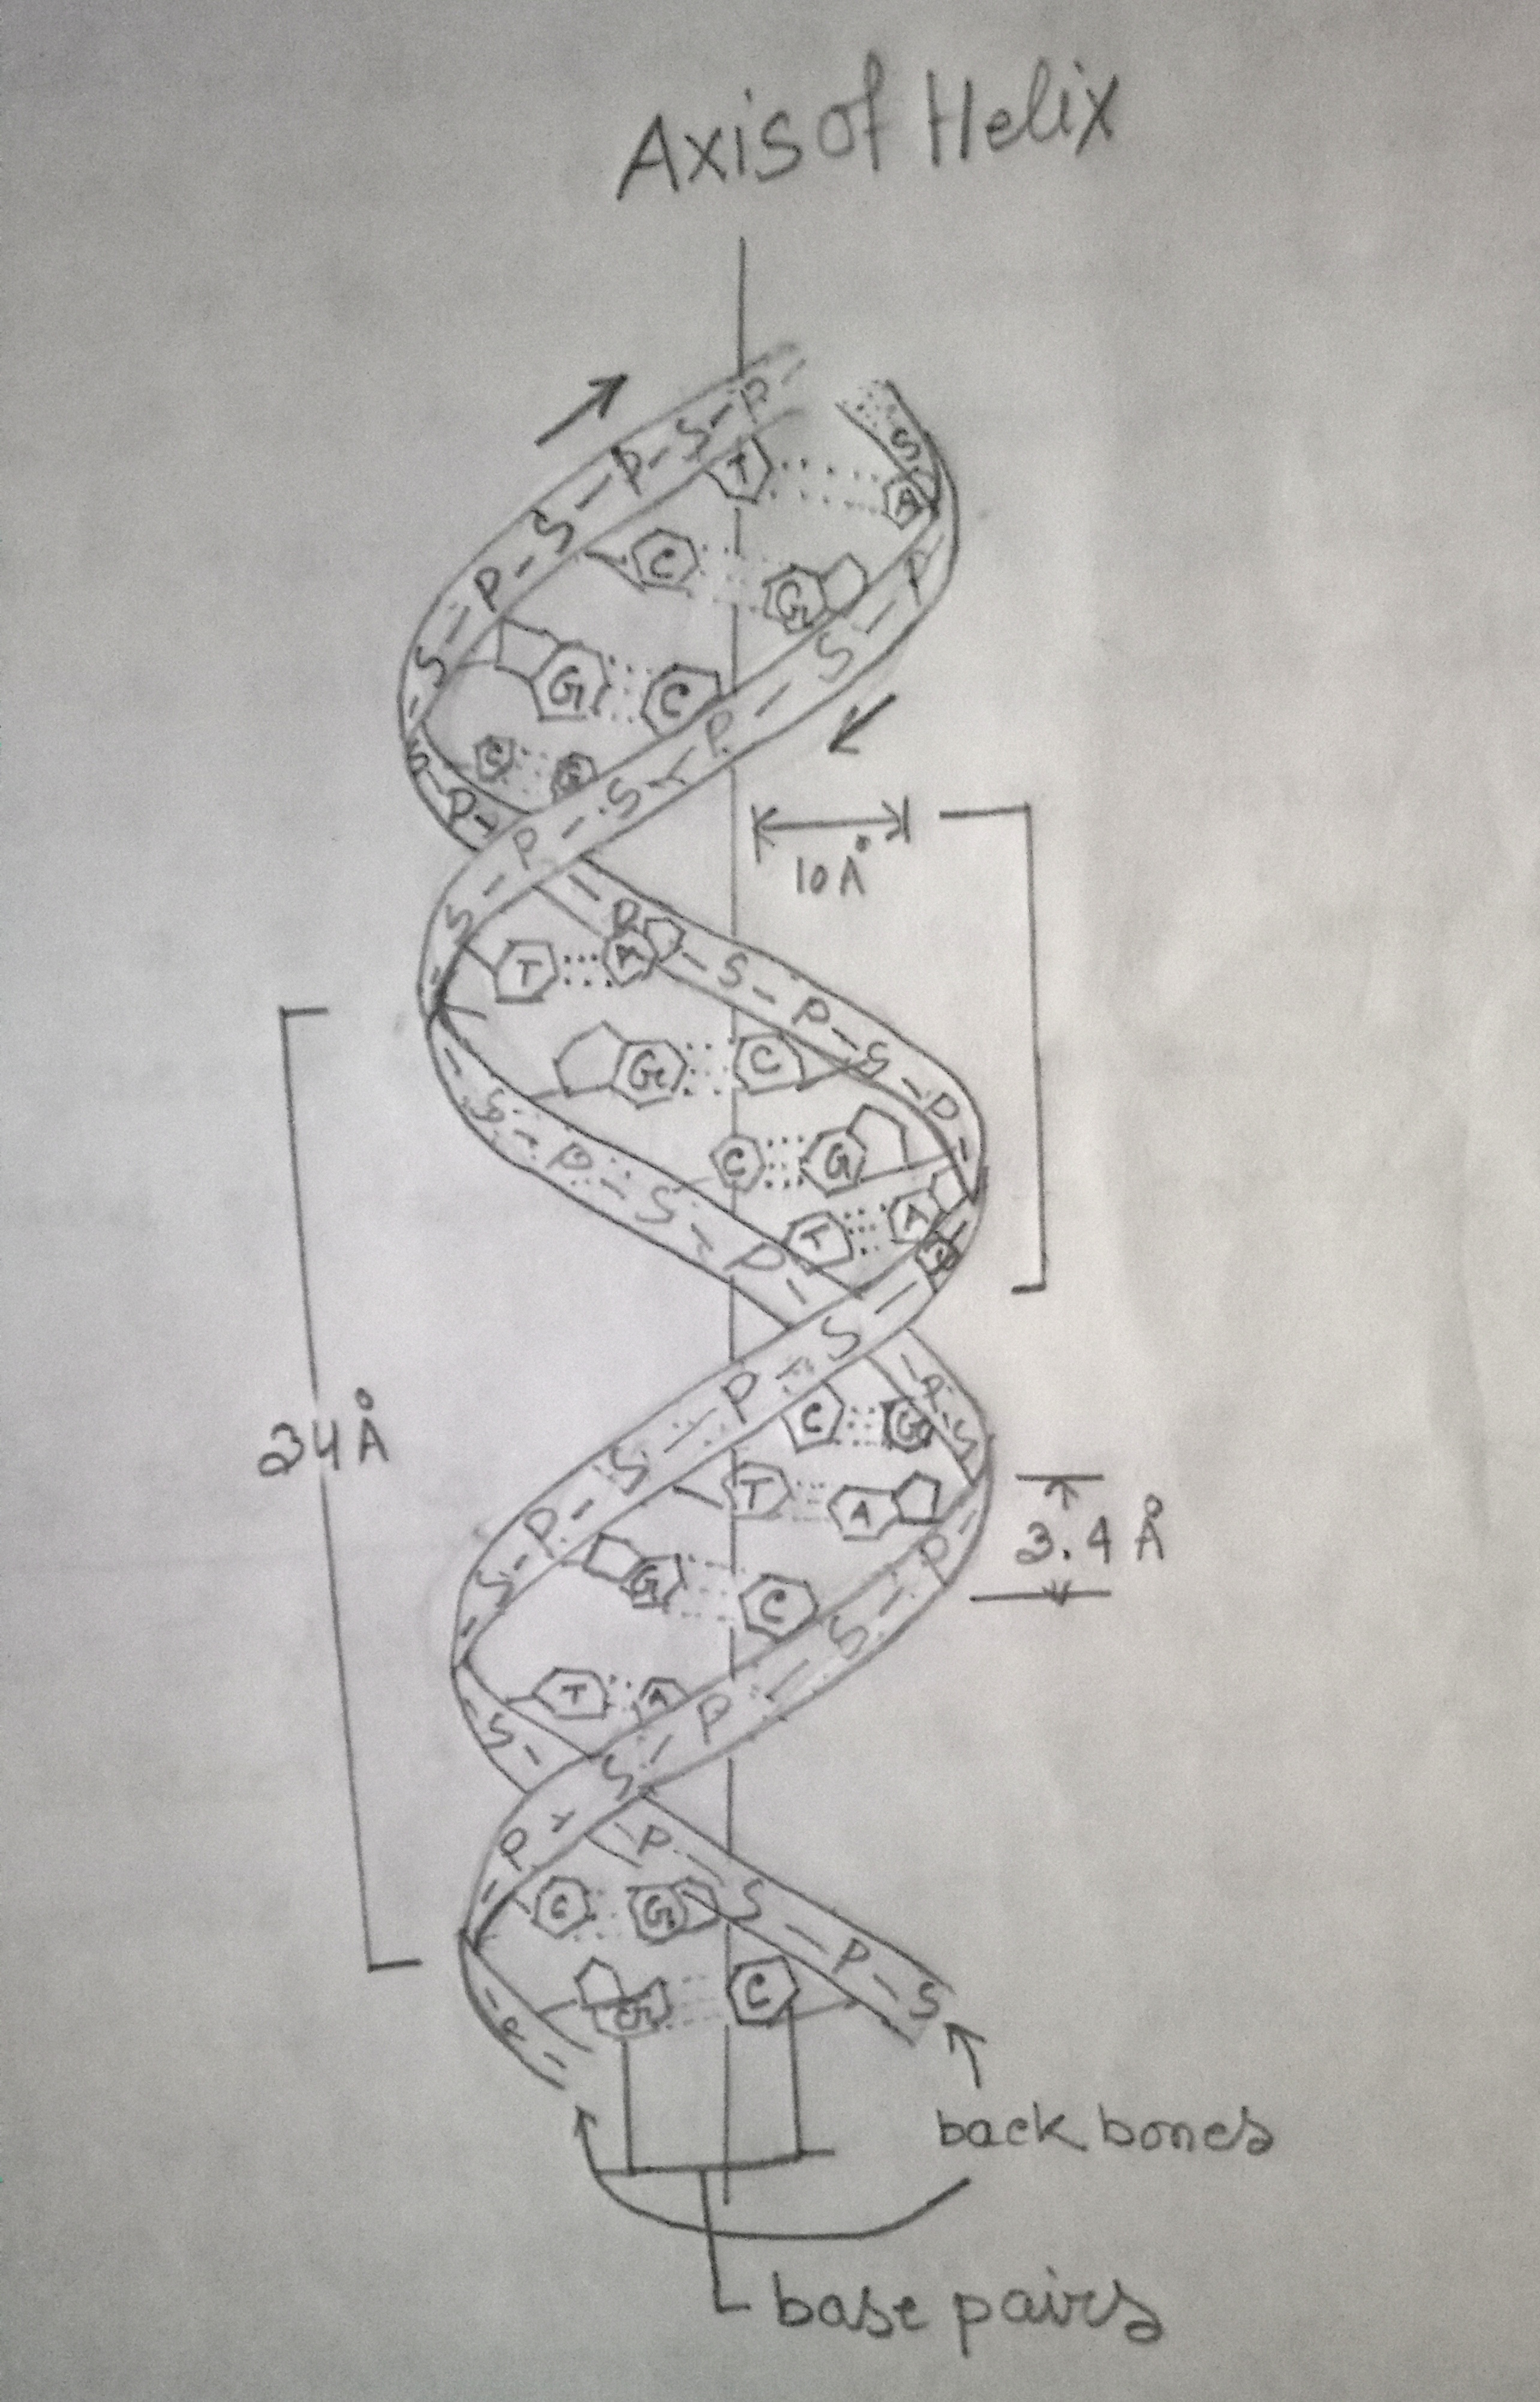 Diagrammatic representation of DNA double helix